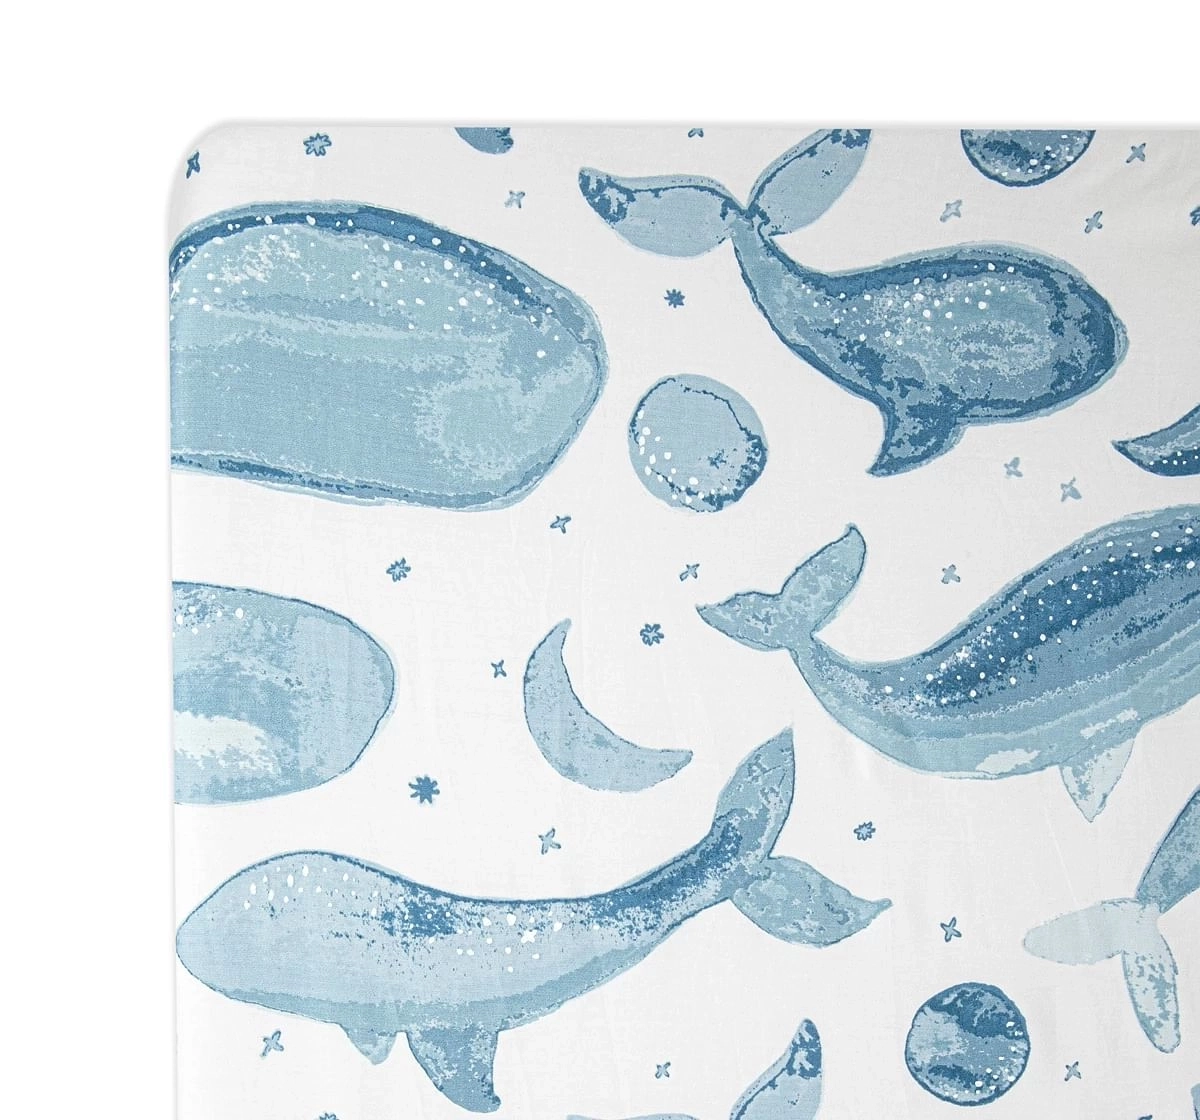 Crane Baby Caspian Collection Crib Sheet Whale 0Y+ Blue